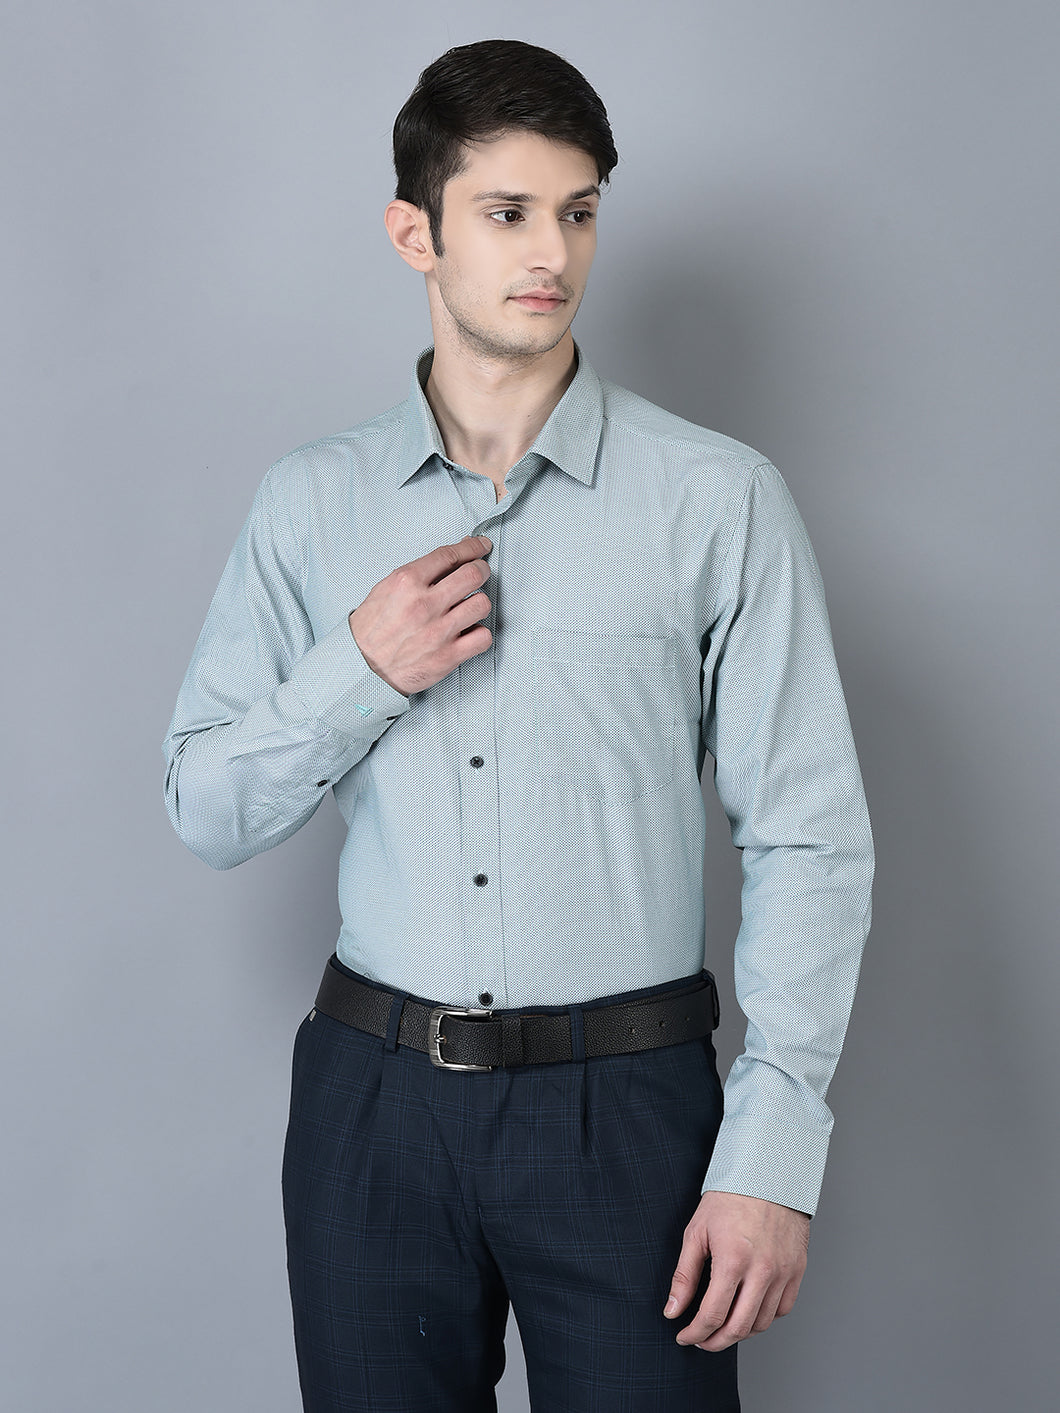 CANOE MEN Formal Shirt Blue Color Cotton Fabric Button Closure Printed